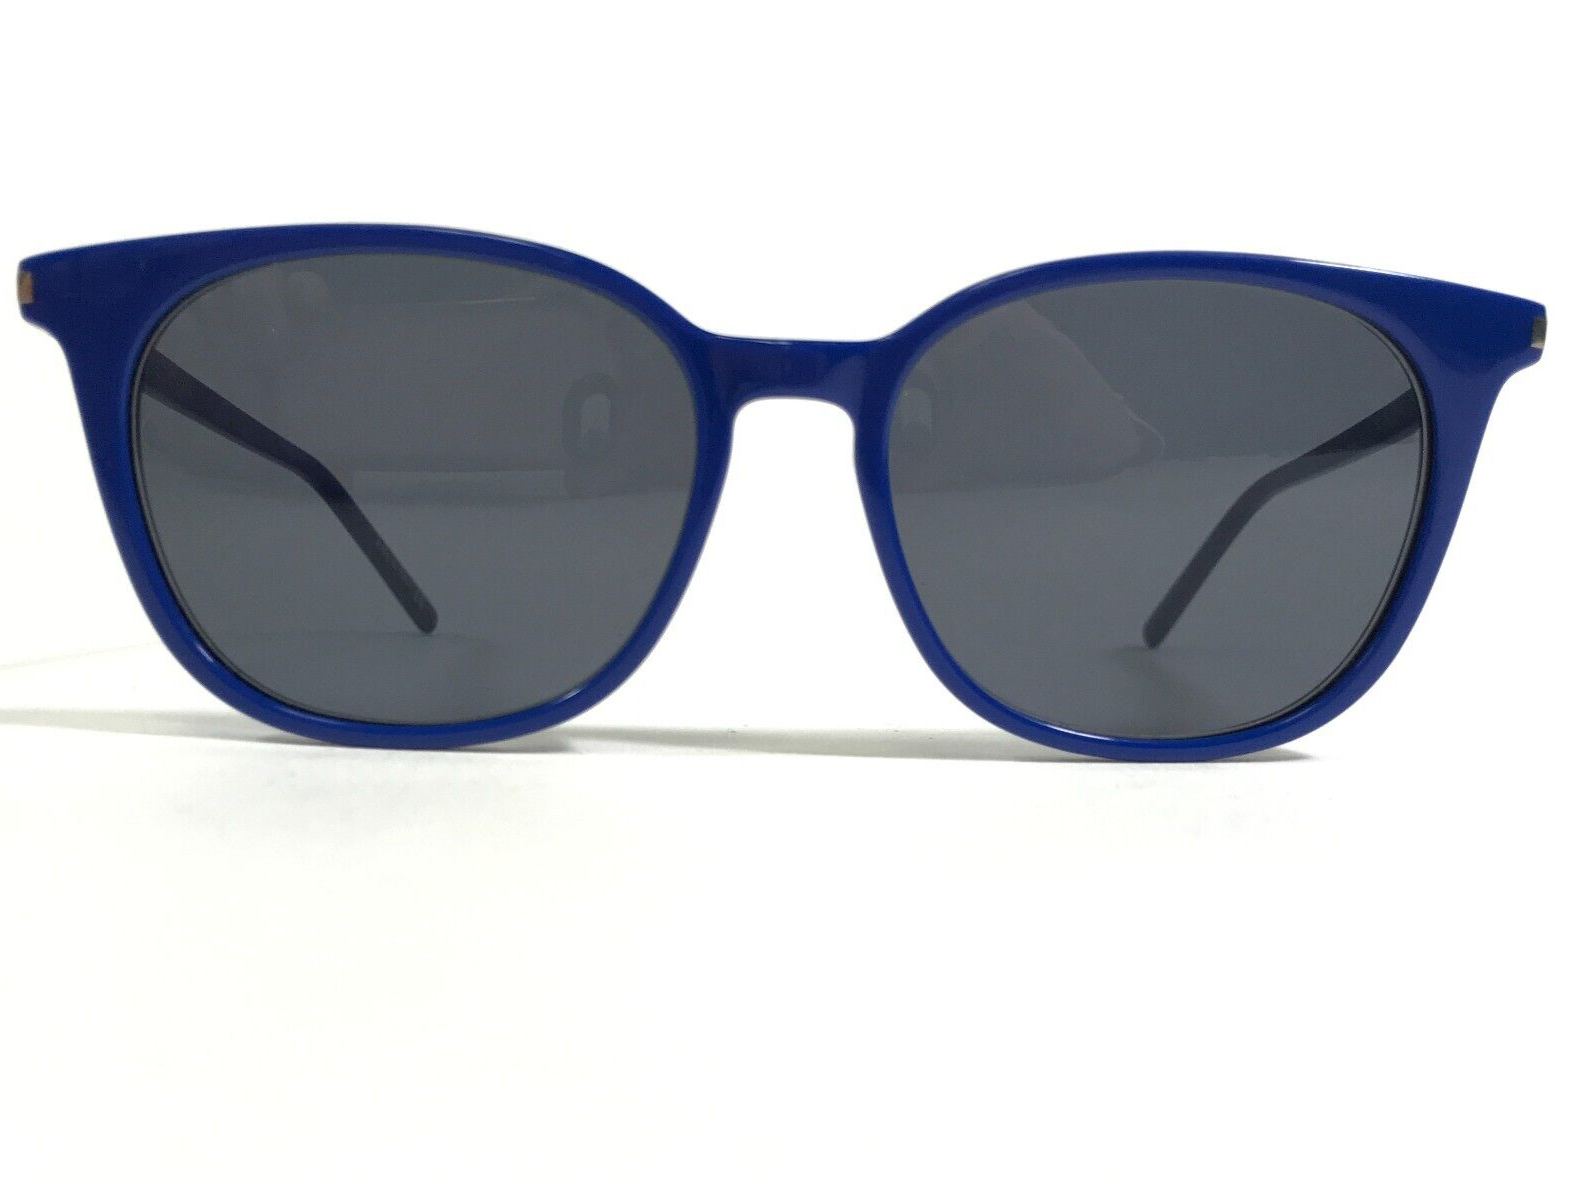 Saint Laurent Sunglasses SL38 SURF 002 Blue Horn Rim Frames with Blue Lenses - $112.02